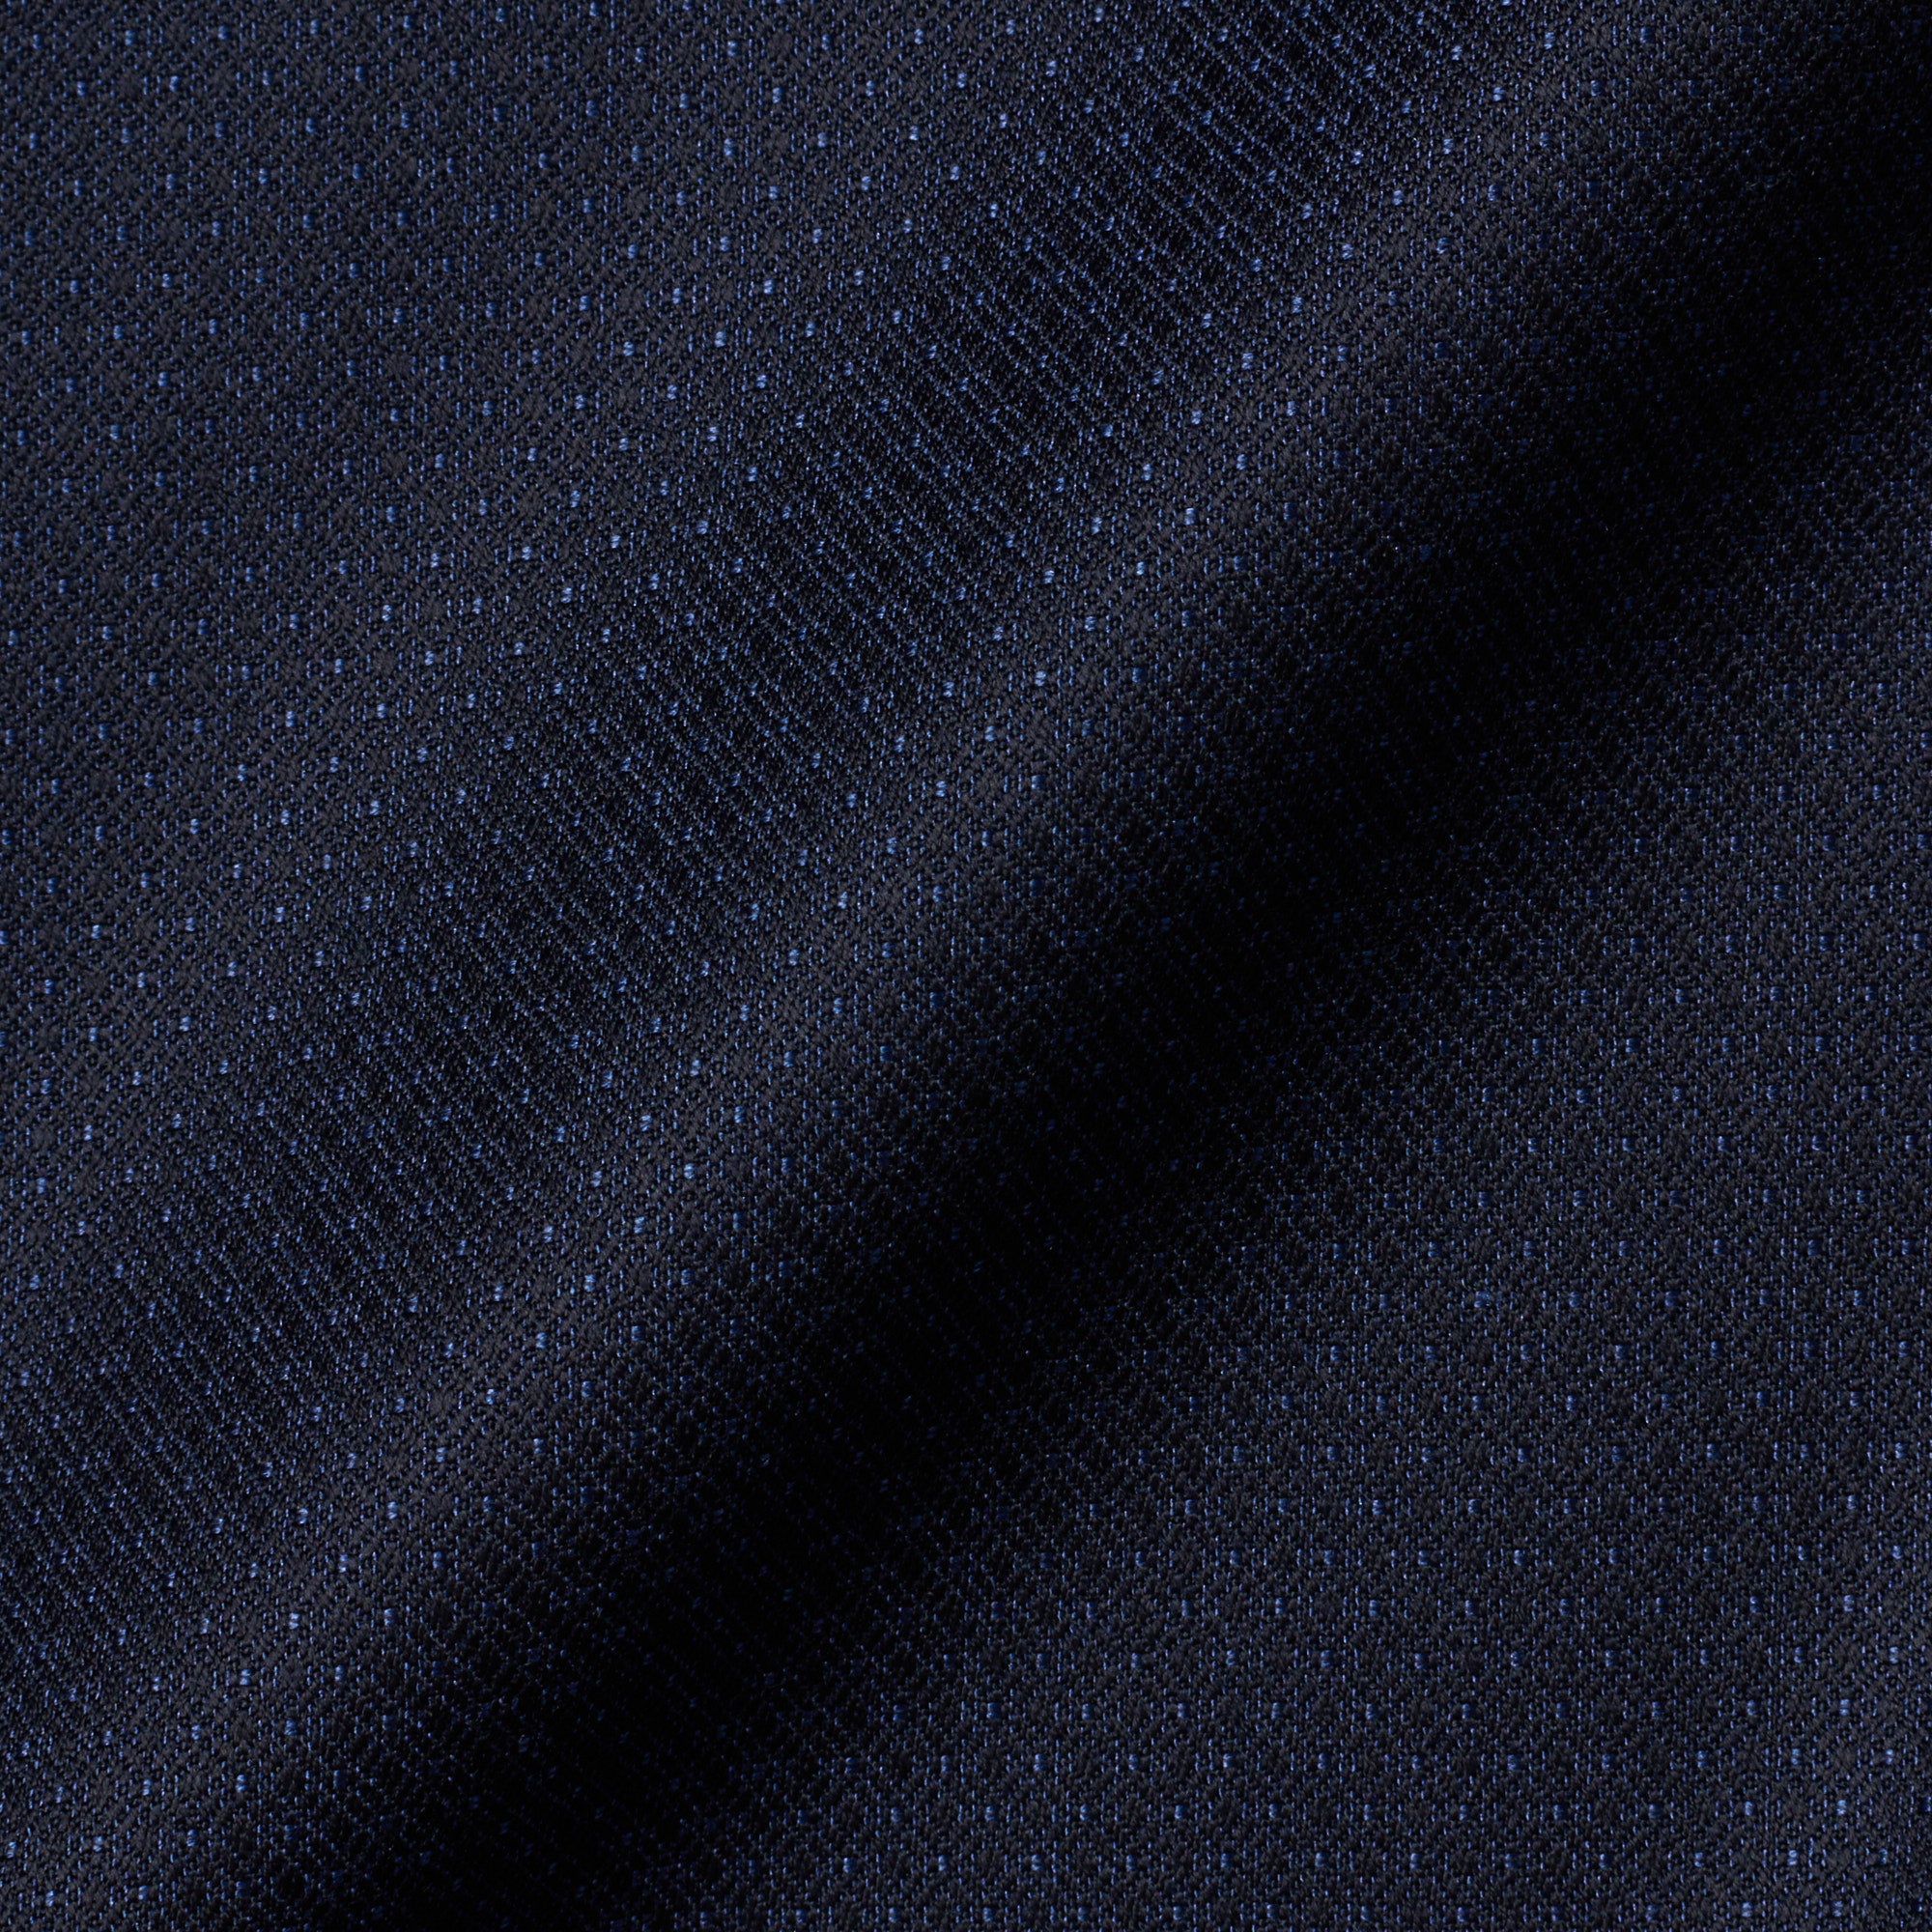 CANALI 1934 Navy Blue Jacquard Wool-Silk 1 Button 3 Piece Suit EU 50 US 40 Slim Fit CANALI